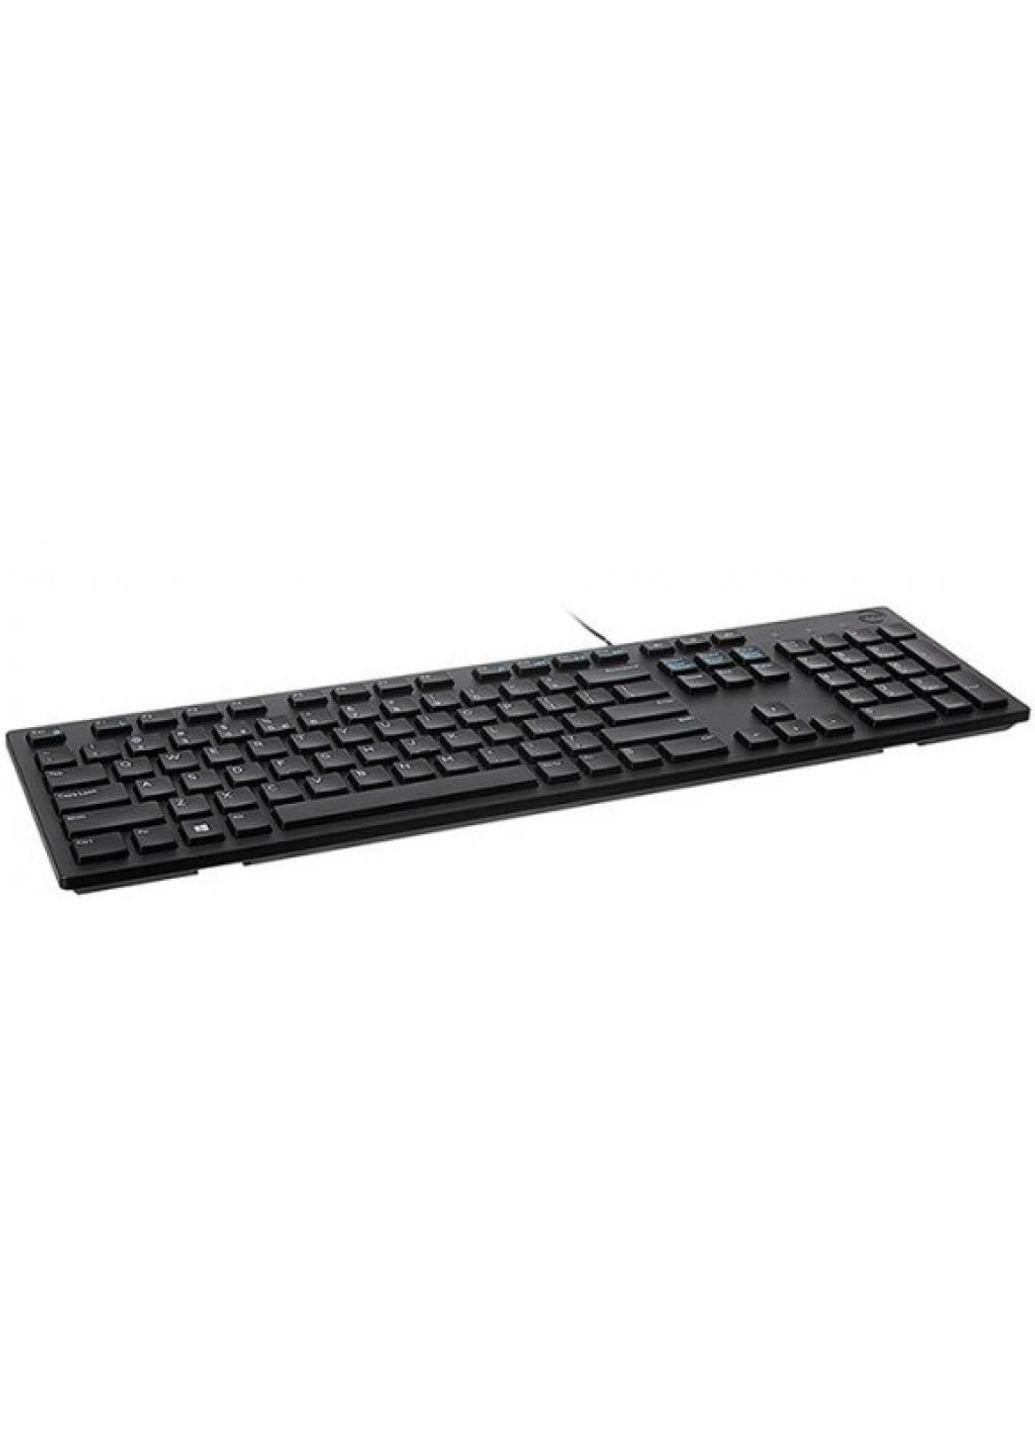 Клавиатура KB216 Multimedia Black (580-AHHE) Dell (250604416)